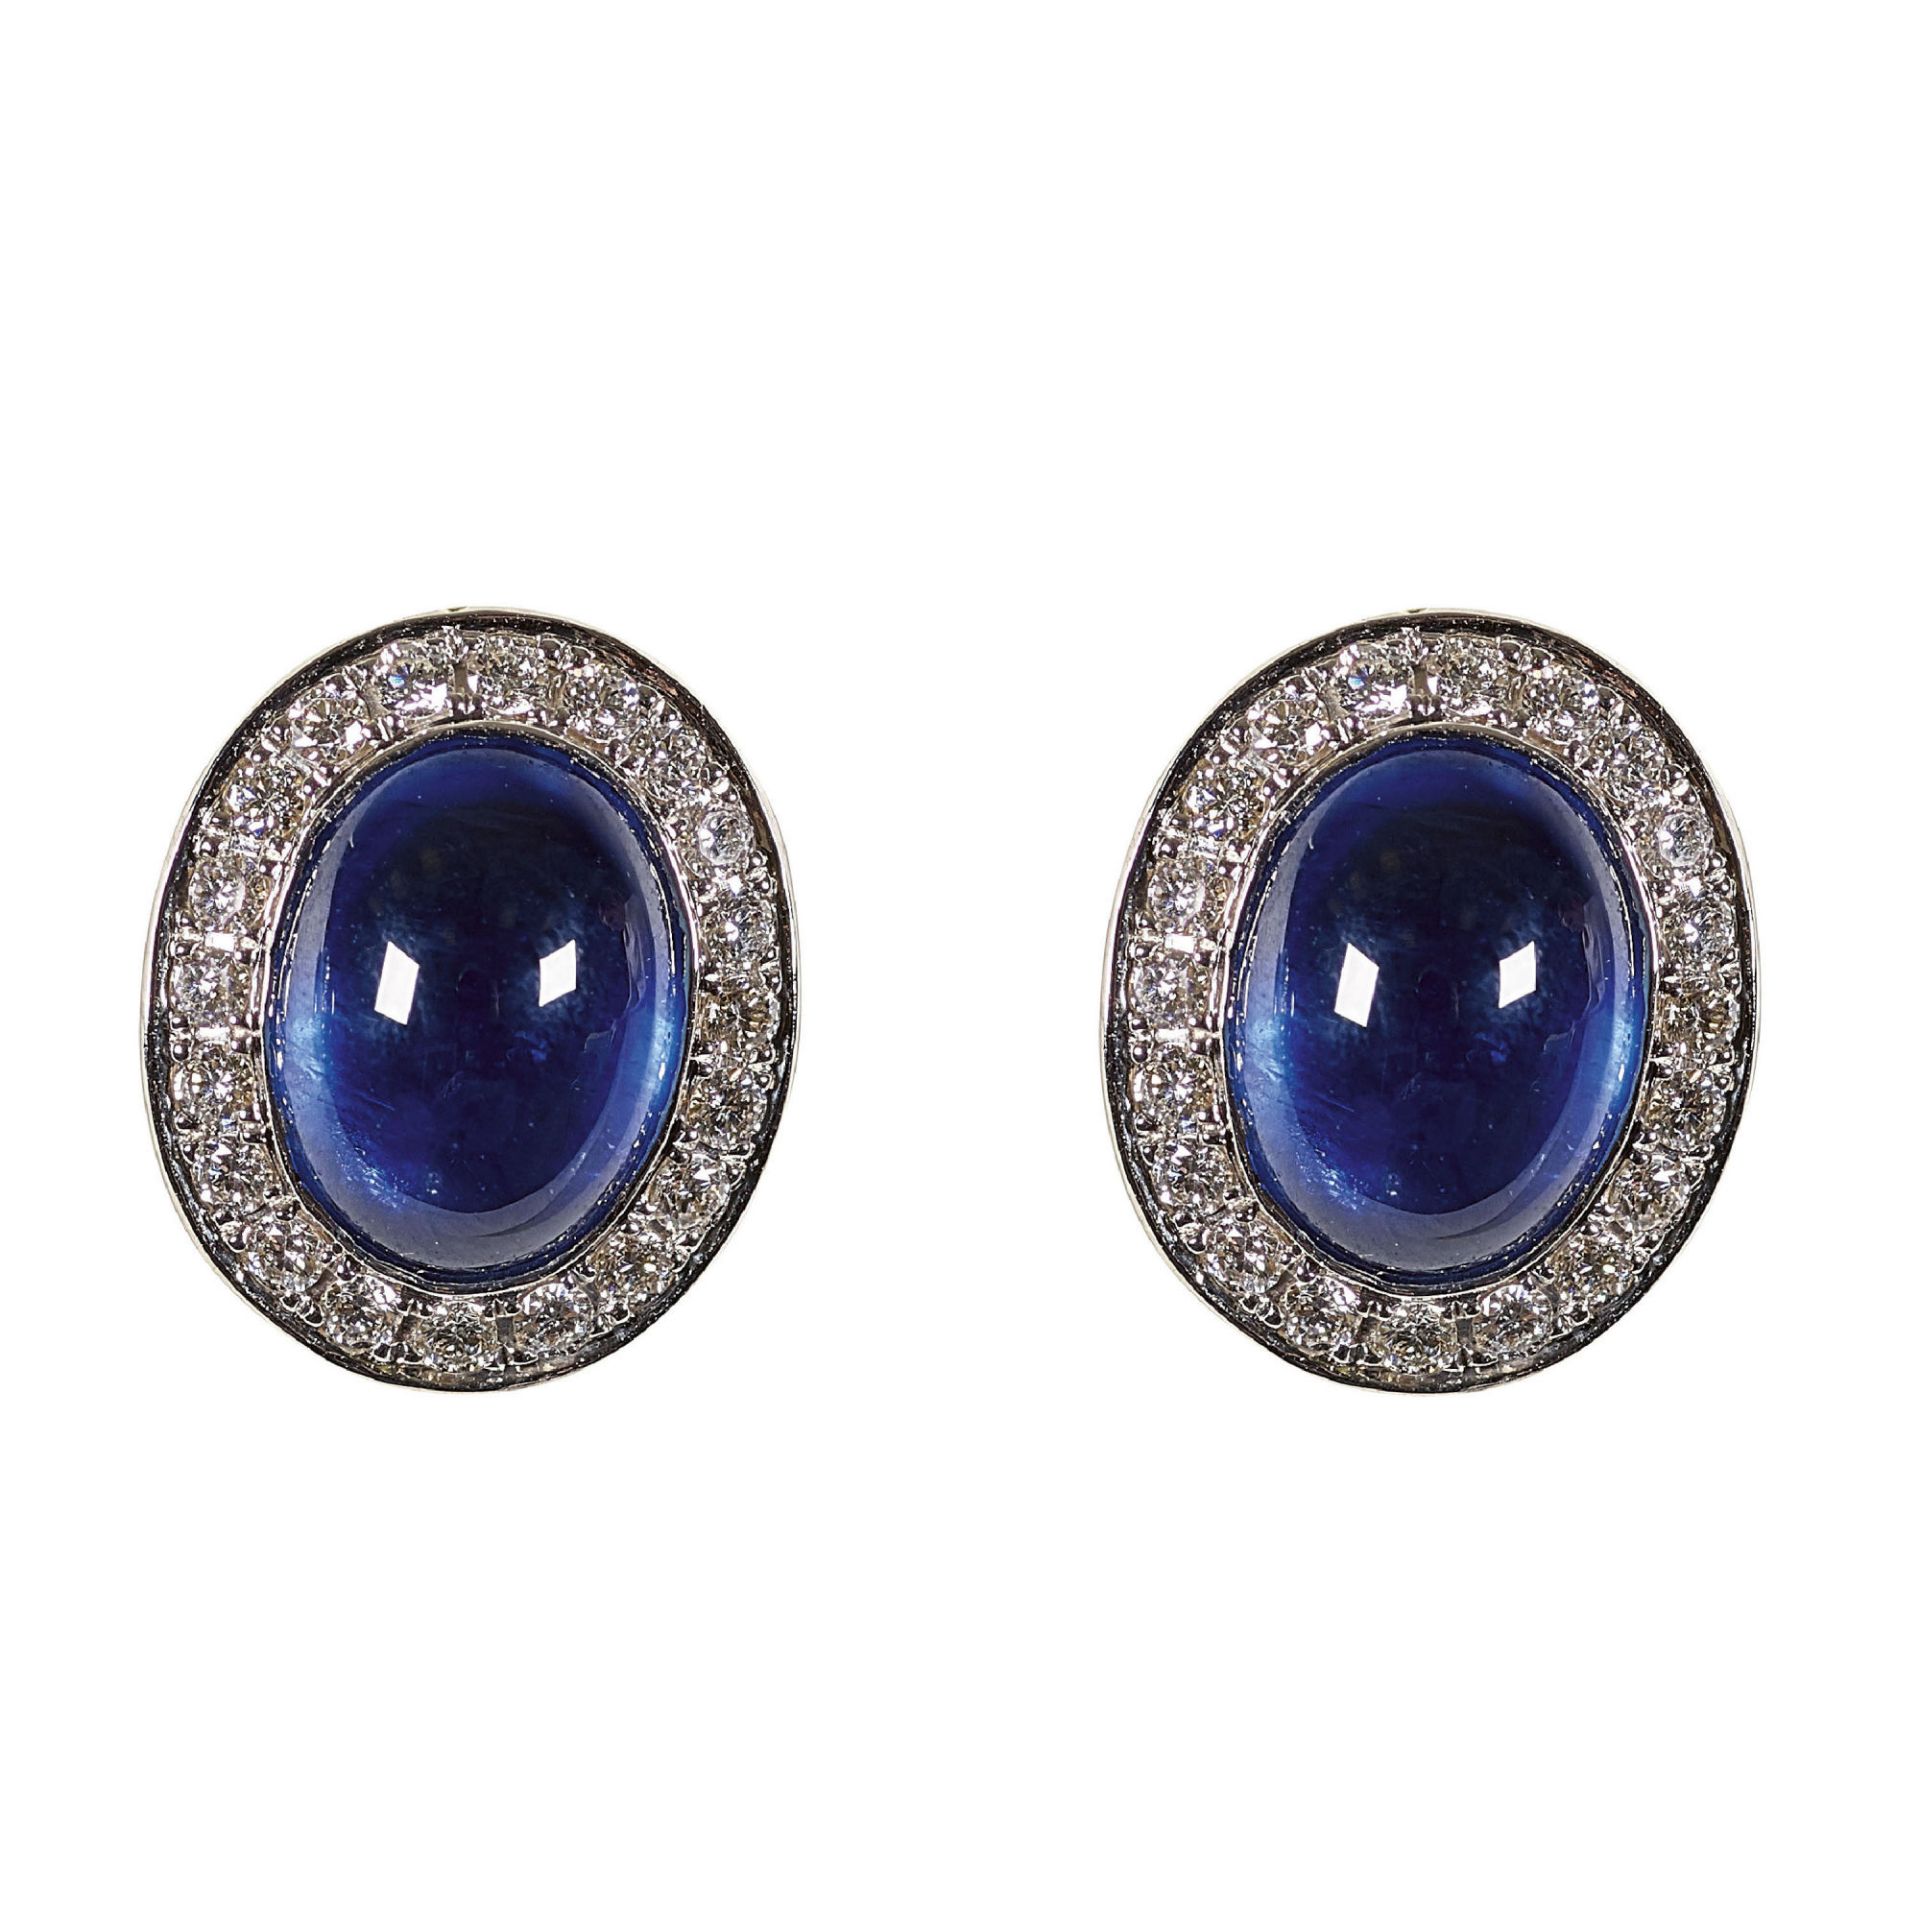 SAPHIR-DIAMANT-OHRSTECKER / Sapphire-diamond earrings